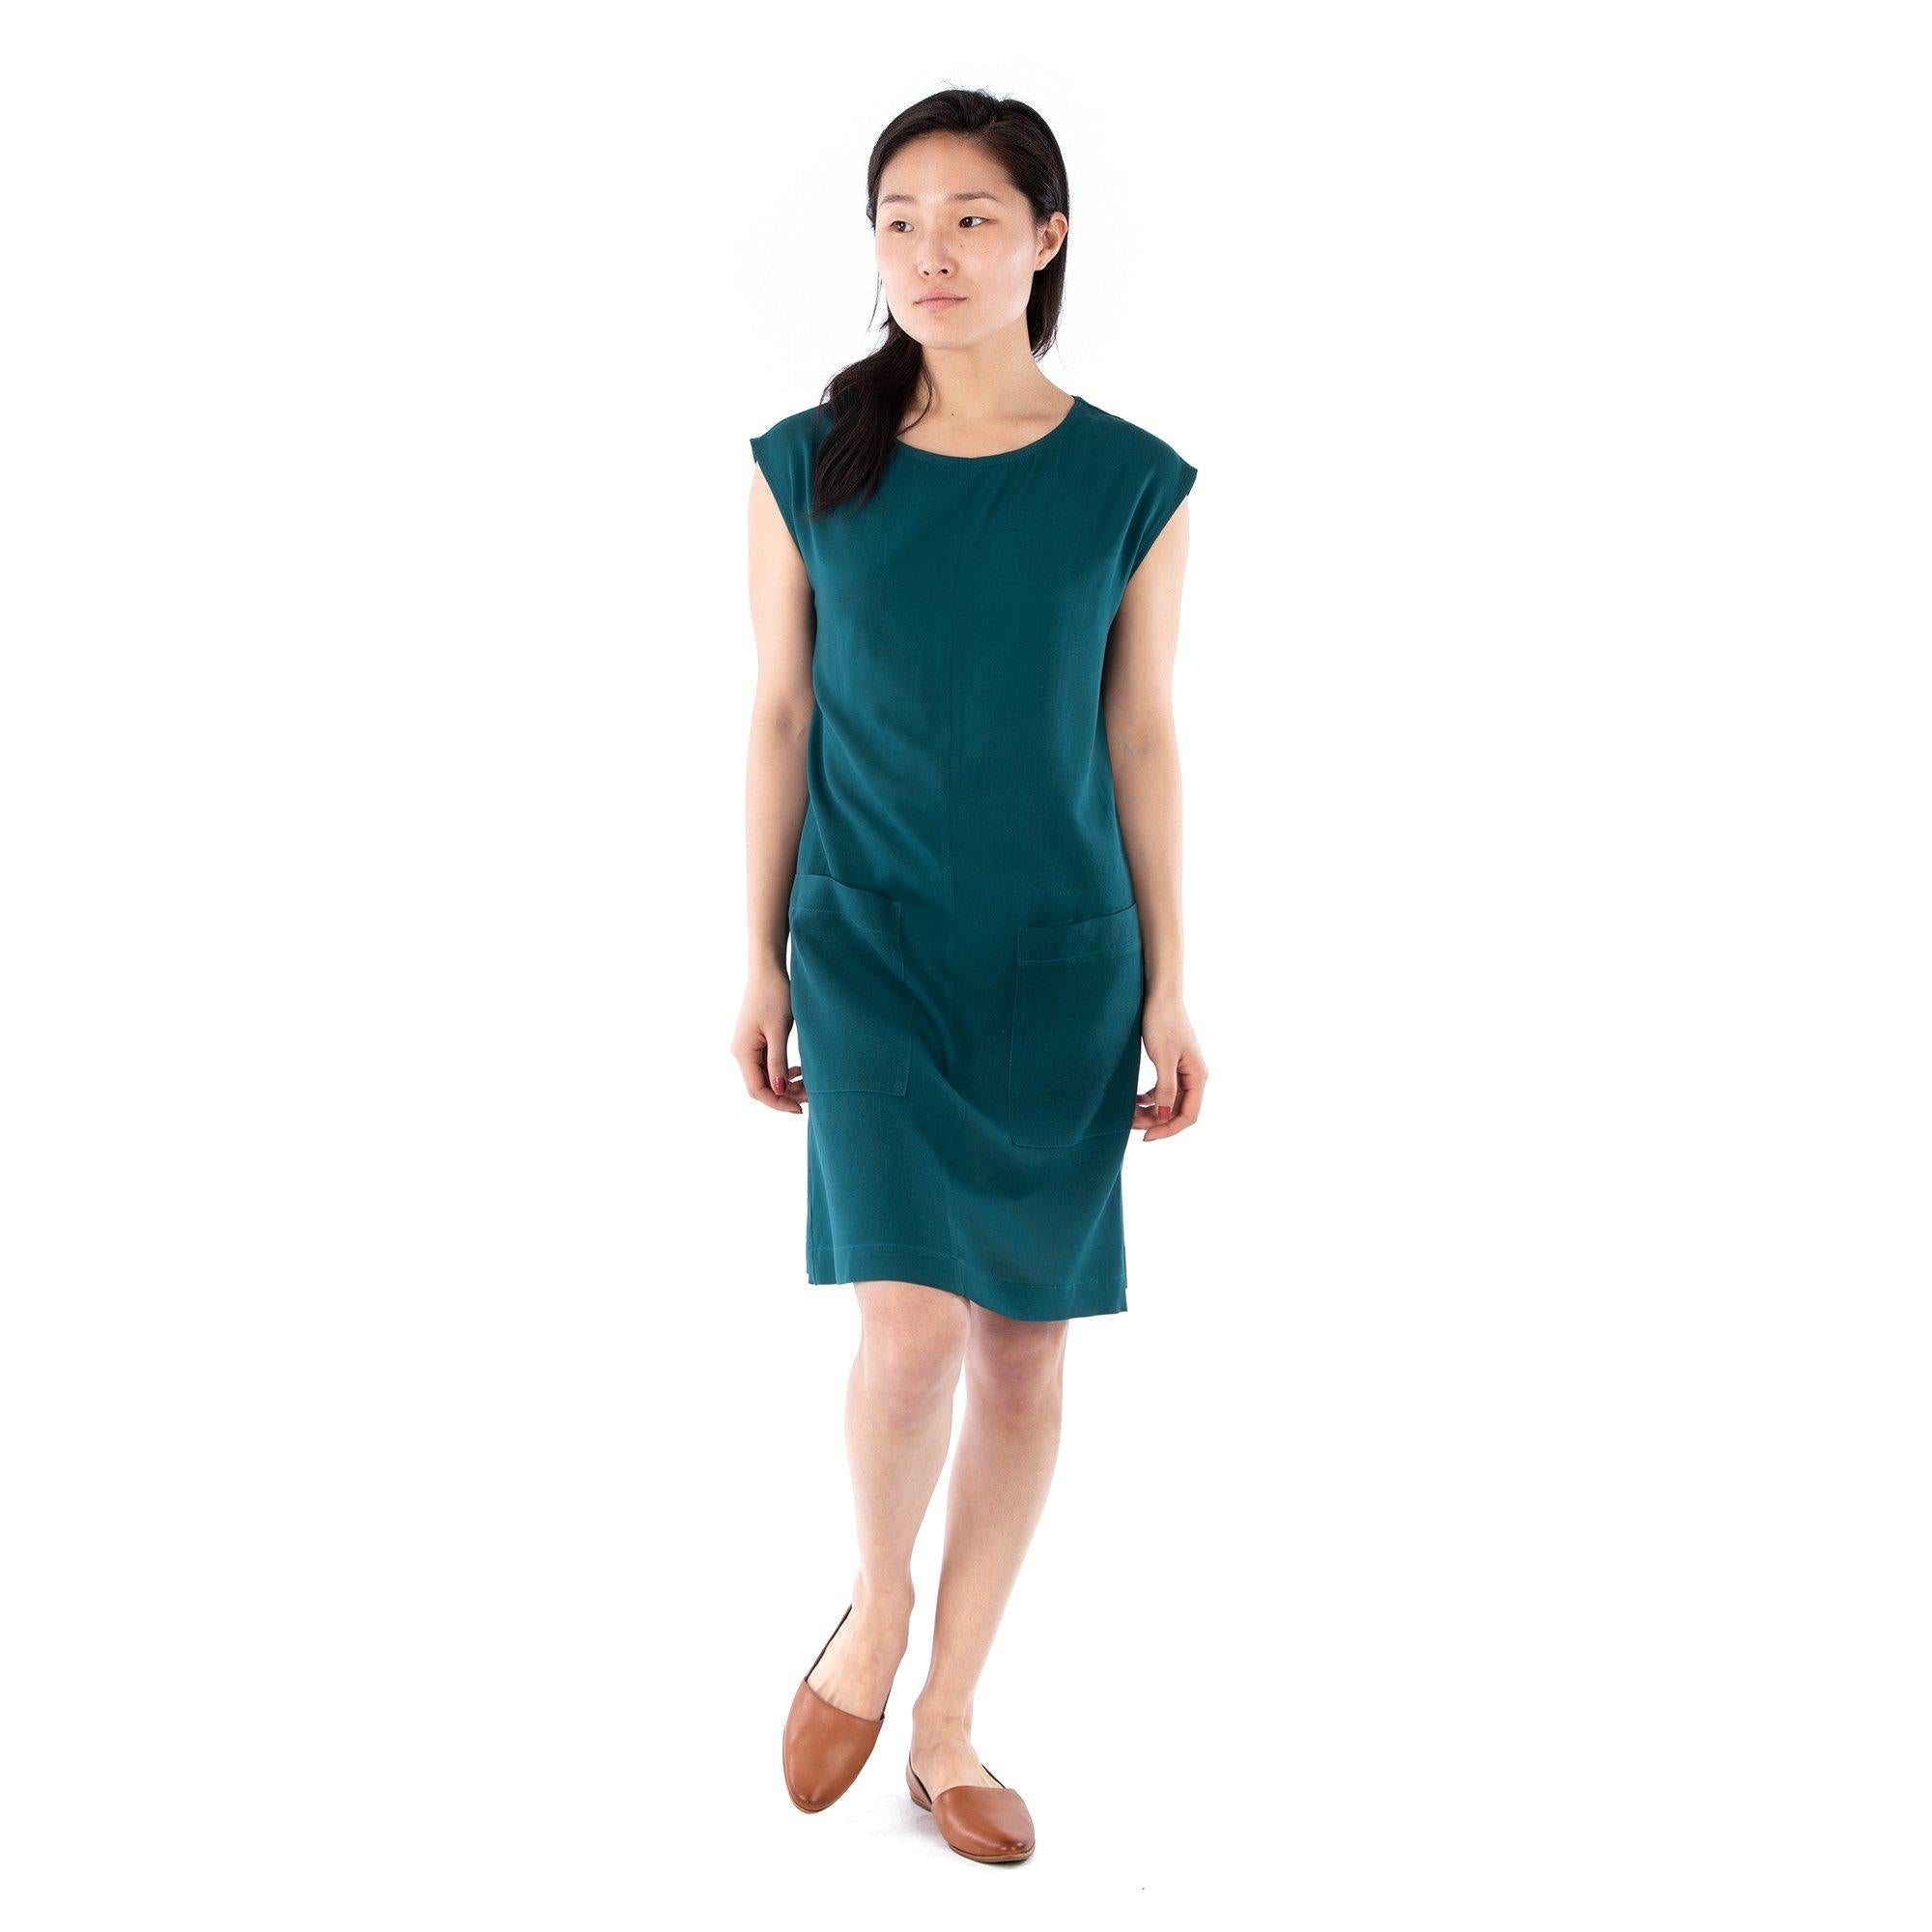 Jalie 4019 - BIANCA - Sleeveless dress with pockets